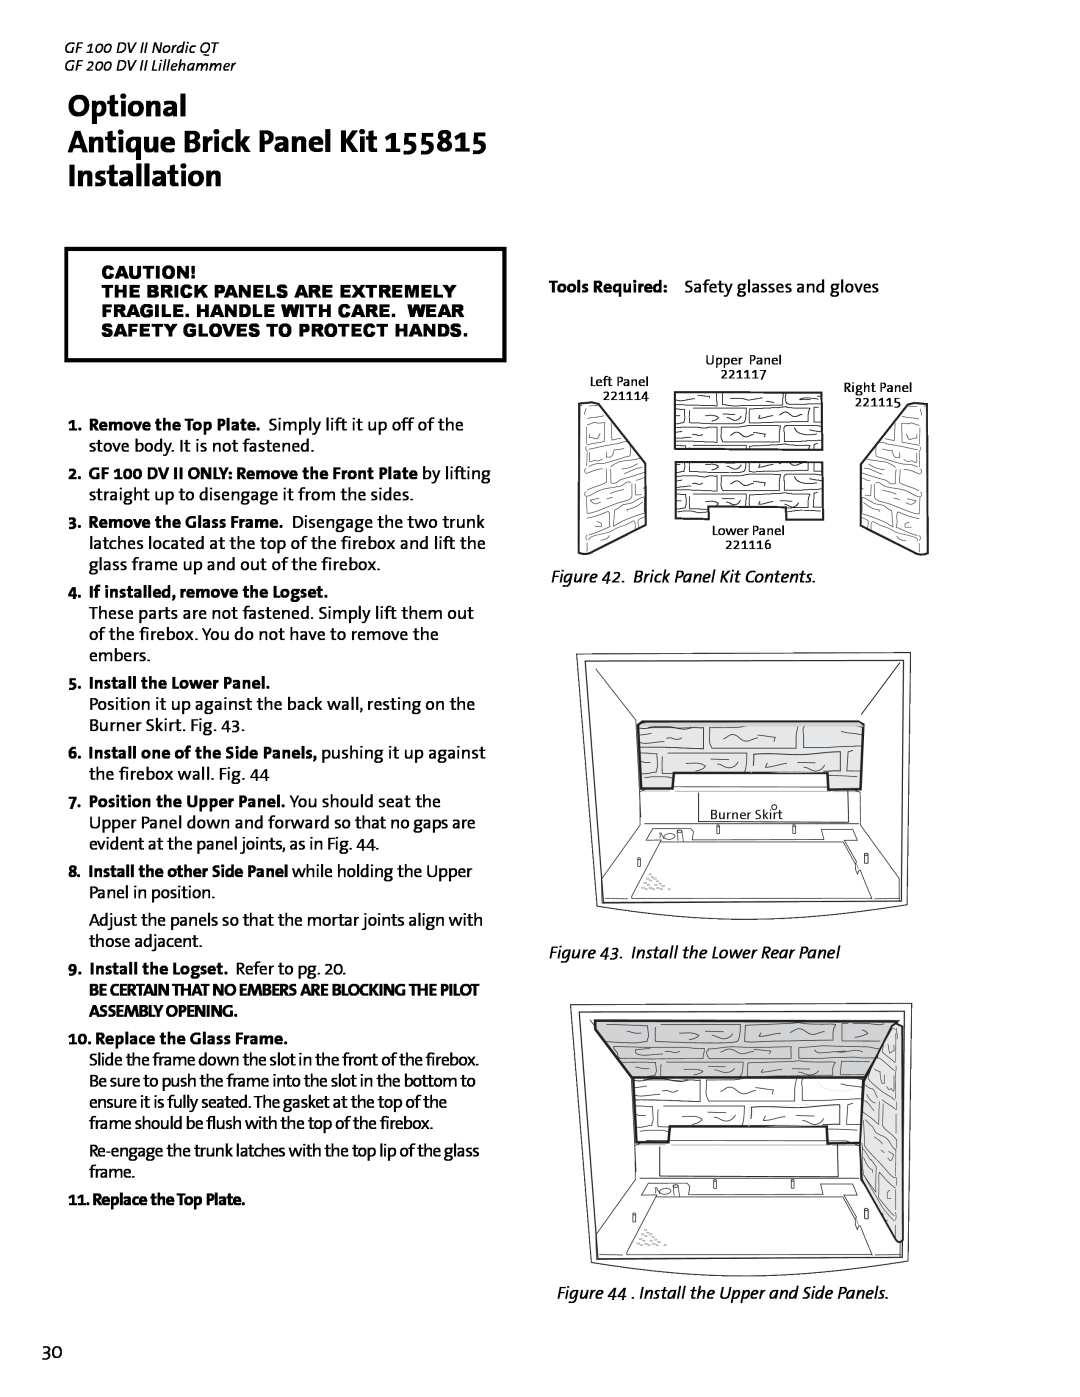 Jotul GF 100 DV II, GF 200 DV II manual Optional Antique Brick Panel Kit Installation, Brick Panel Kit Contents 